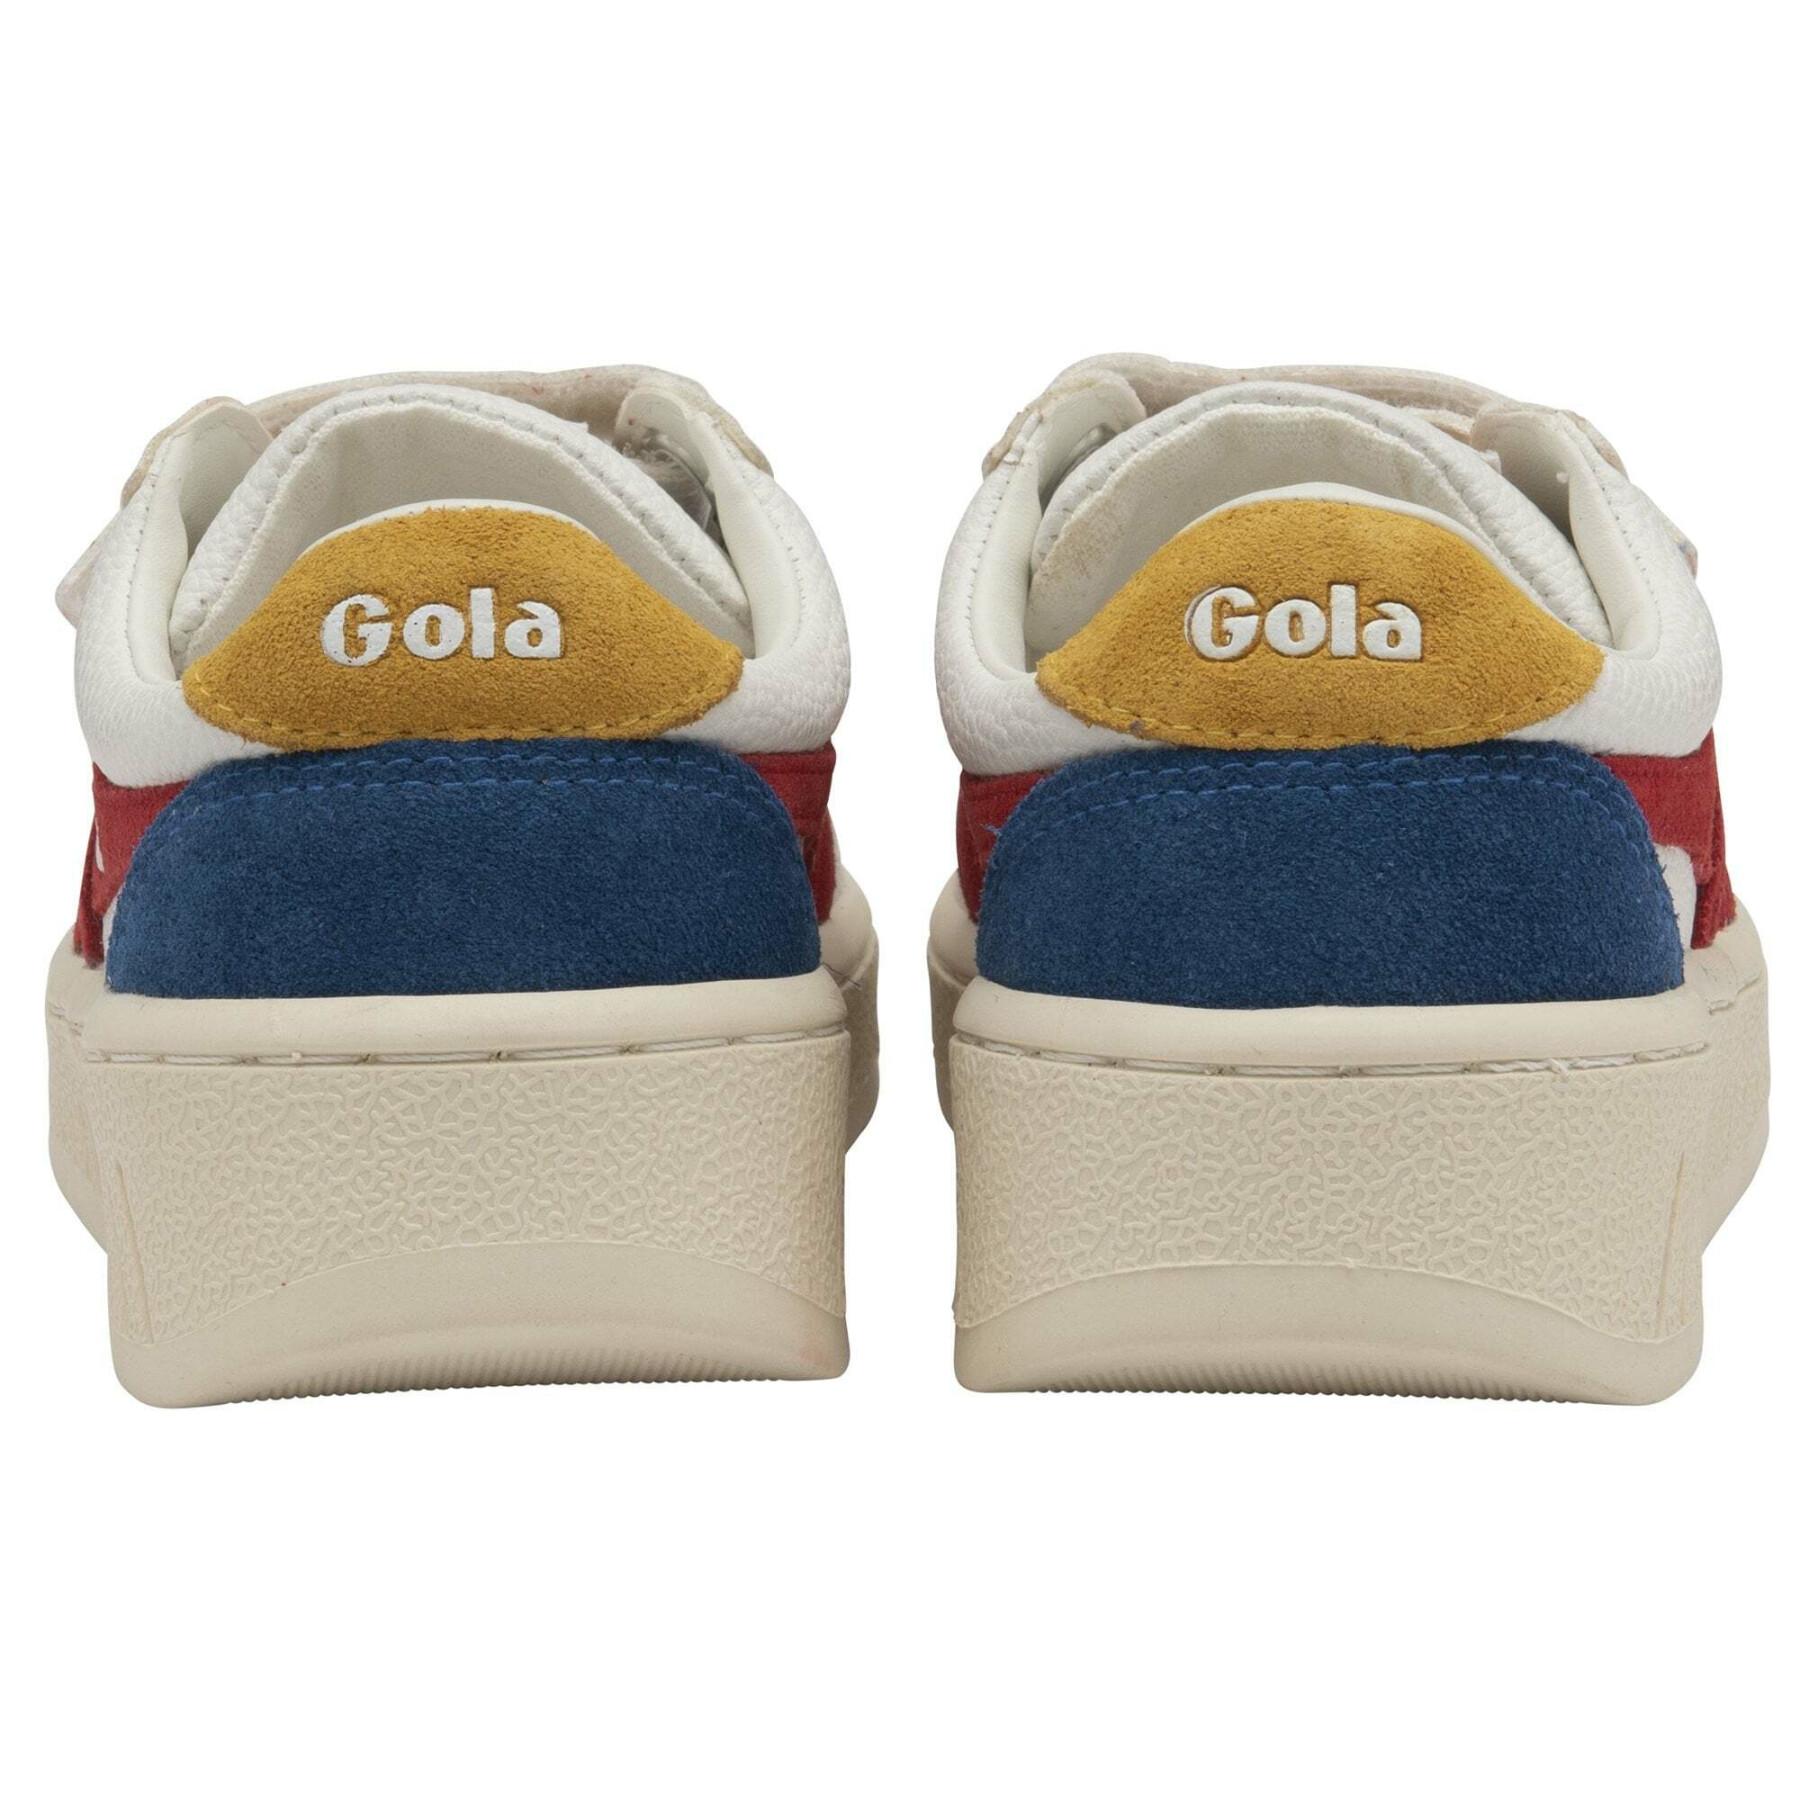 Children's sneakers Gola Grandslam Trident Strap